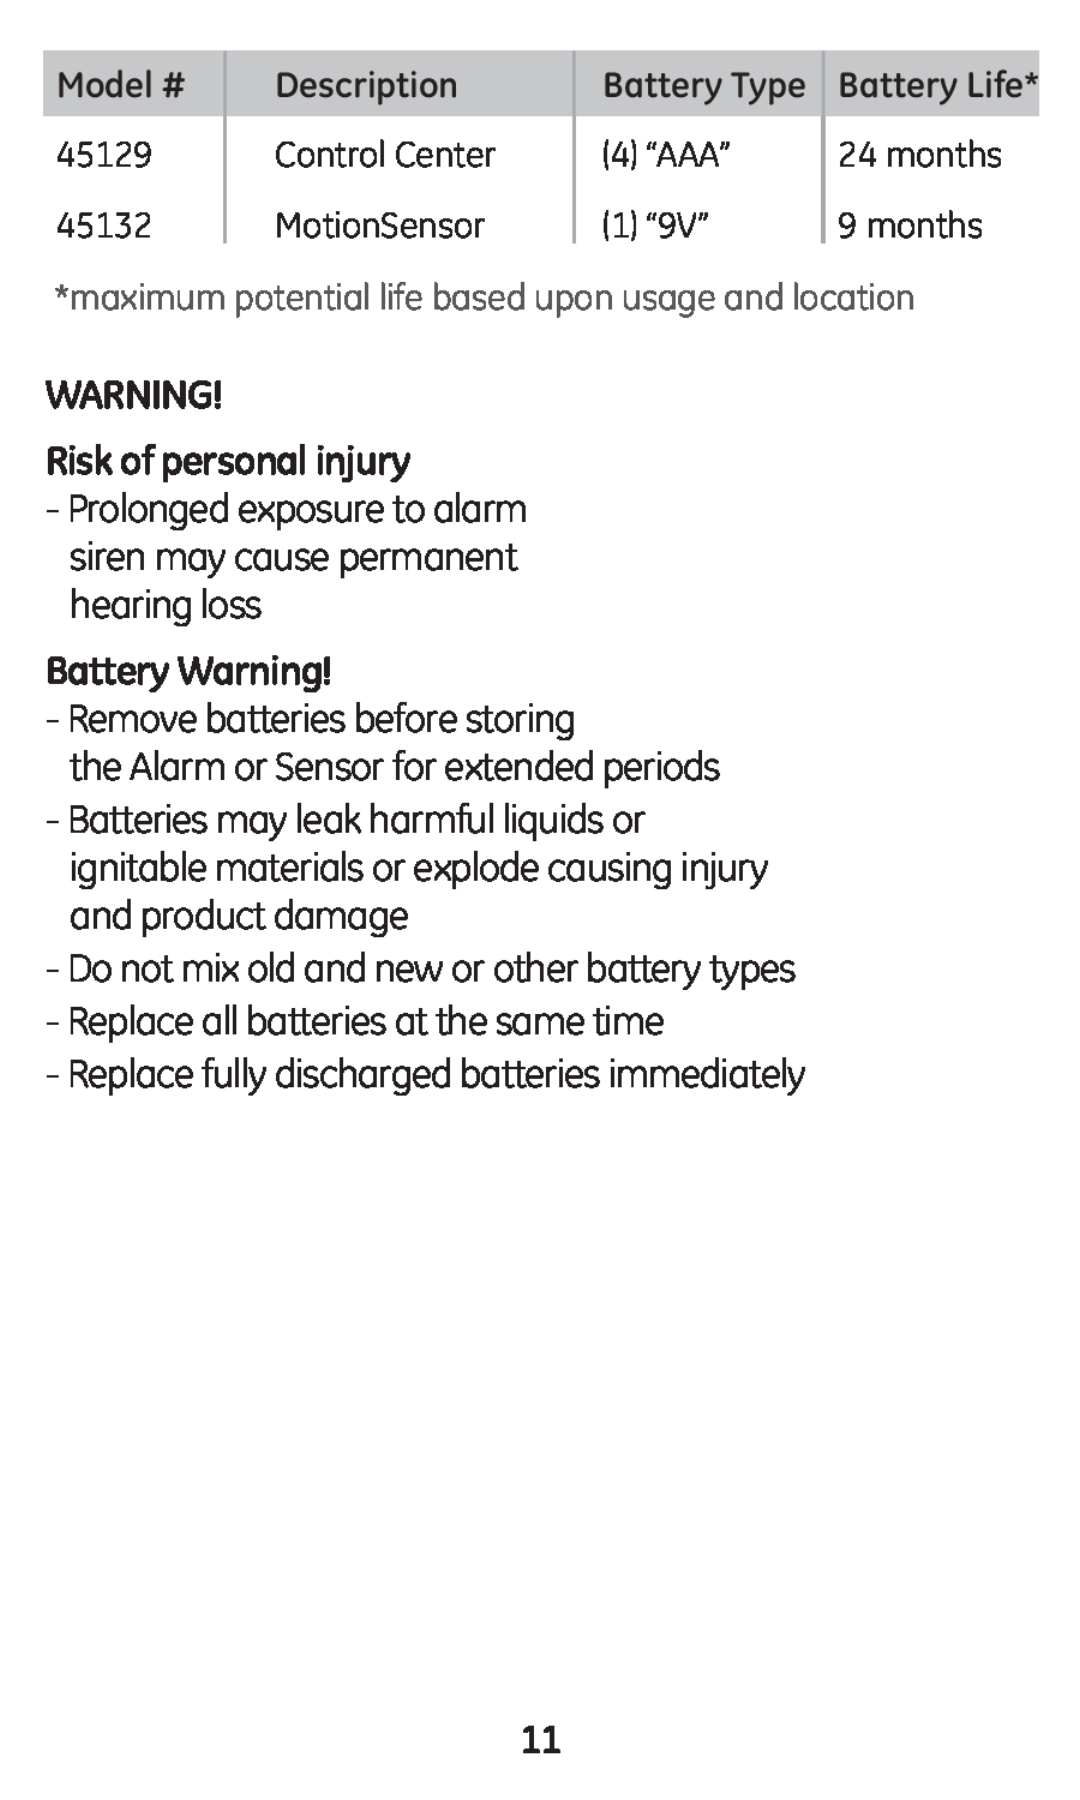 Jasco 45132 user manual Risk of personal injury, Battery Warning 